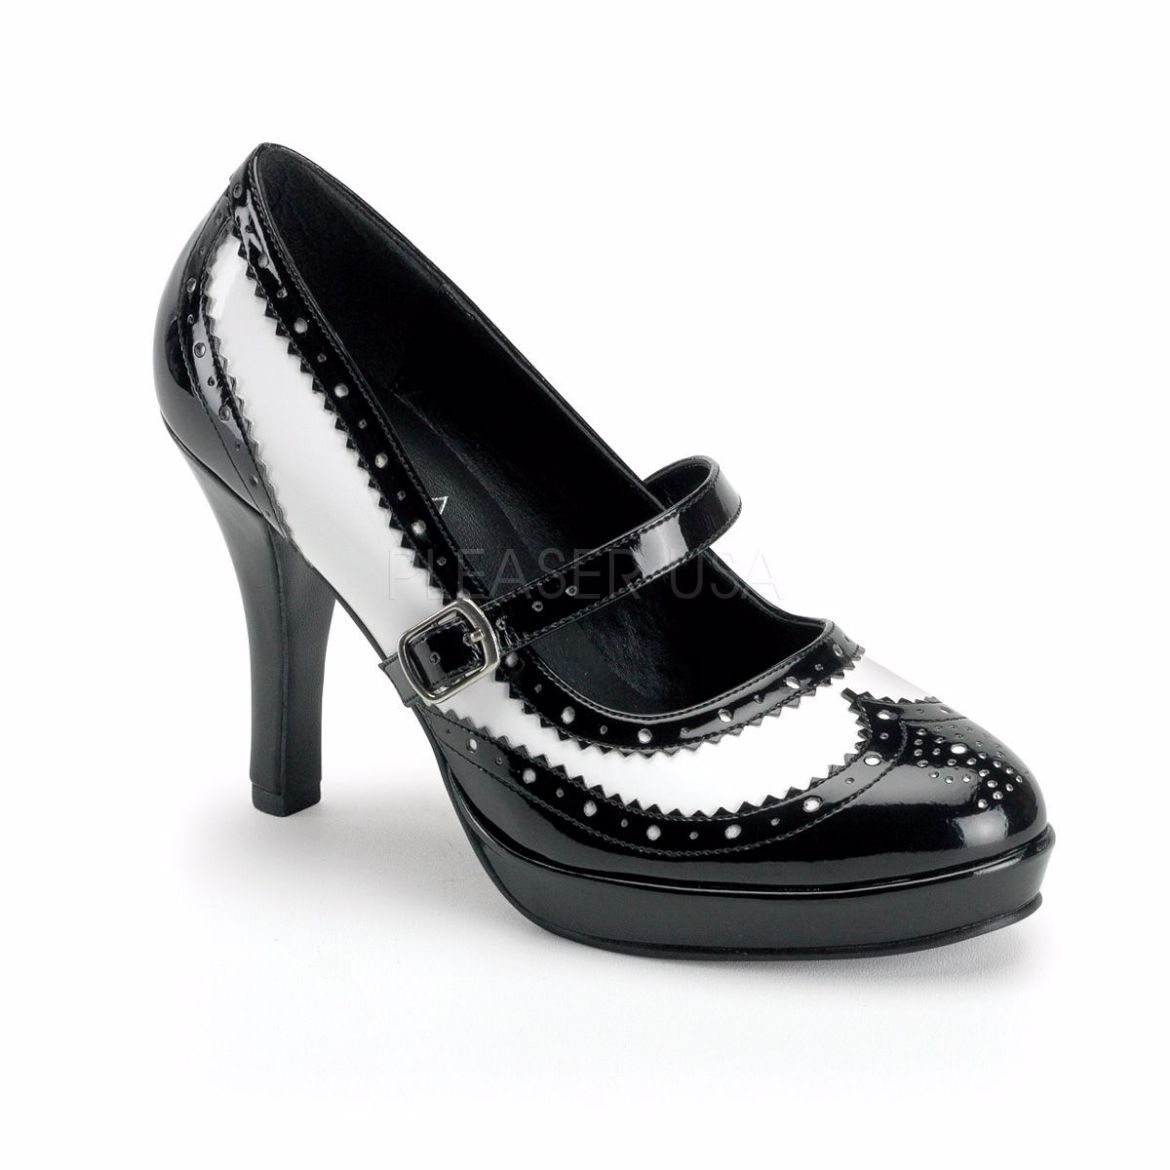 Product image of Funtasma Contessa-06 Black-White Patent, 4 inch (10.2 cm) Heel, 3/4 inch (1.9 cm) Platform Court Pump Shoes